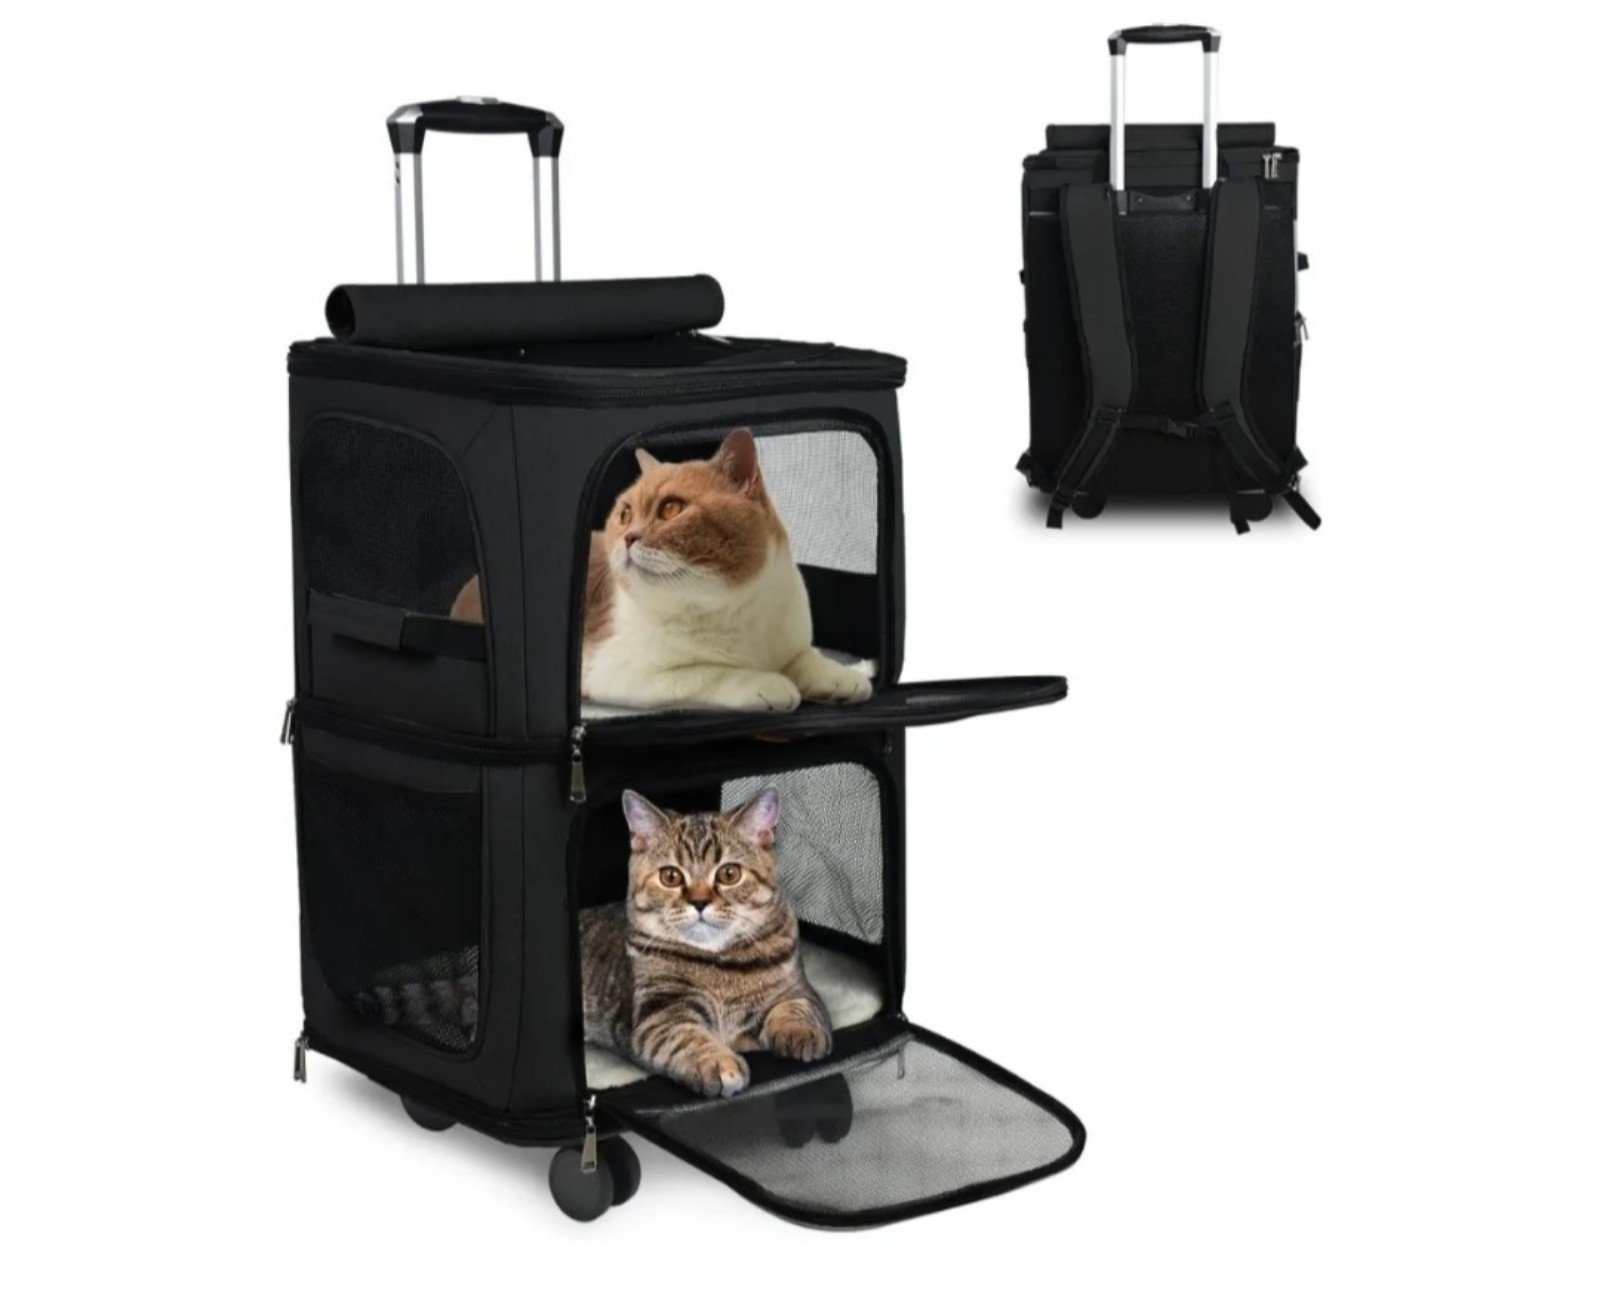 GJEASE Double-Compartment Pet Dog Rolling CarrierBackpack For Travel, GarageBin ki8elKUbp